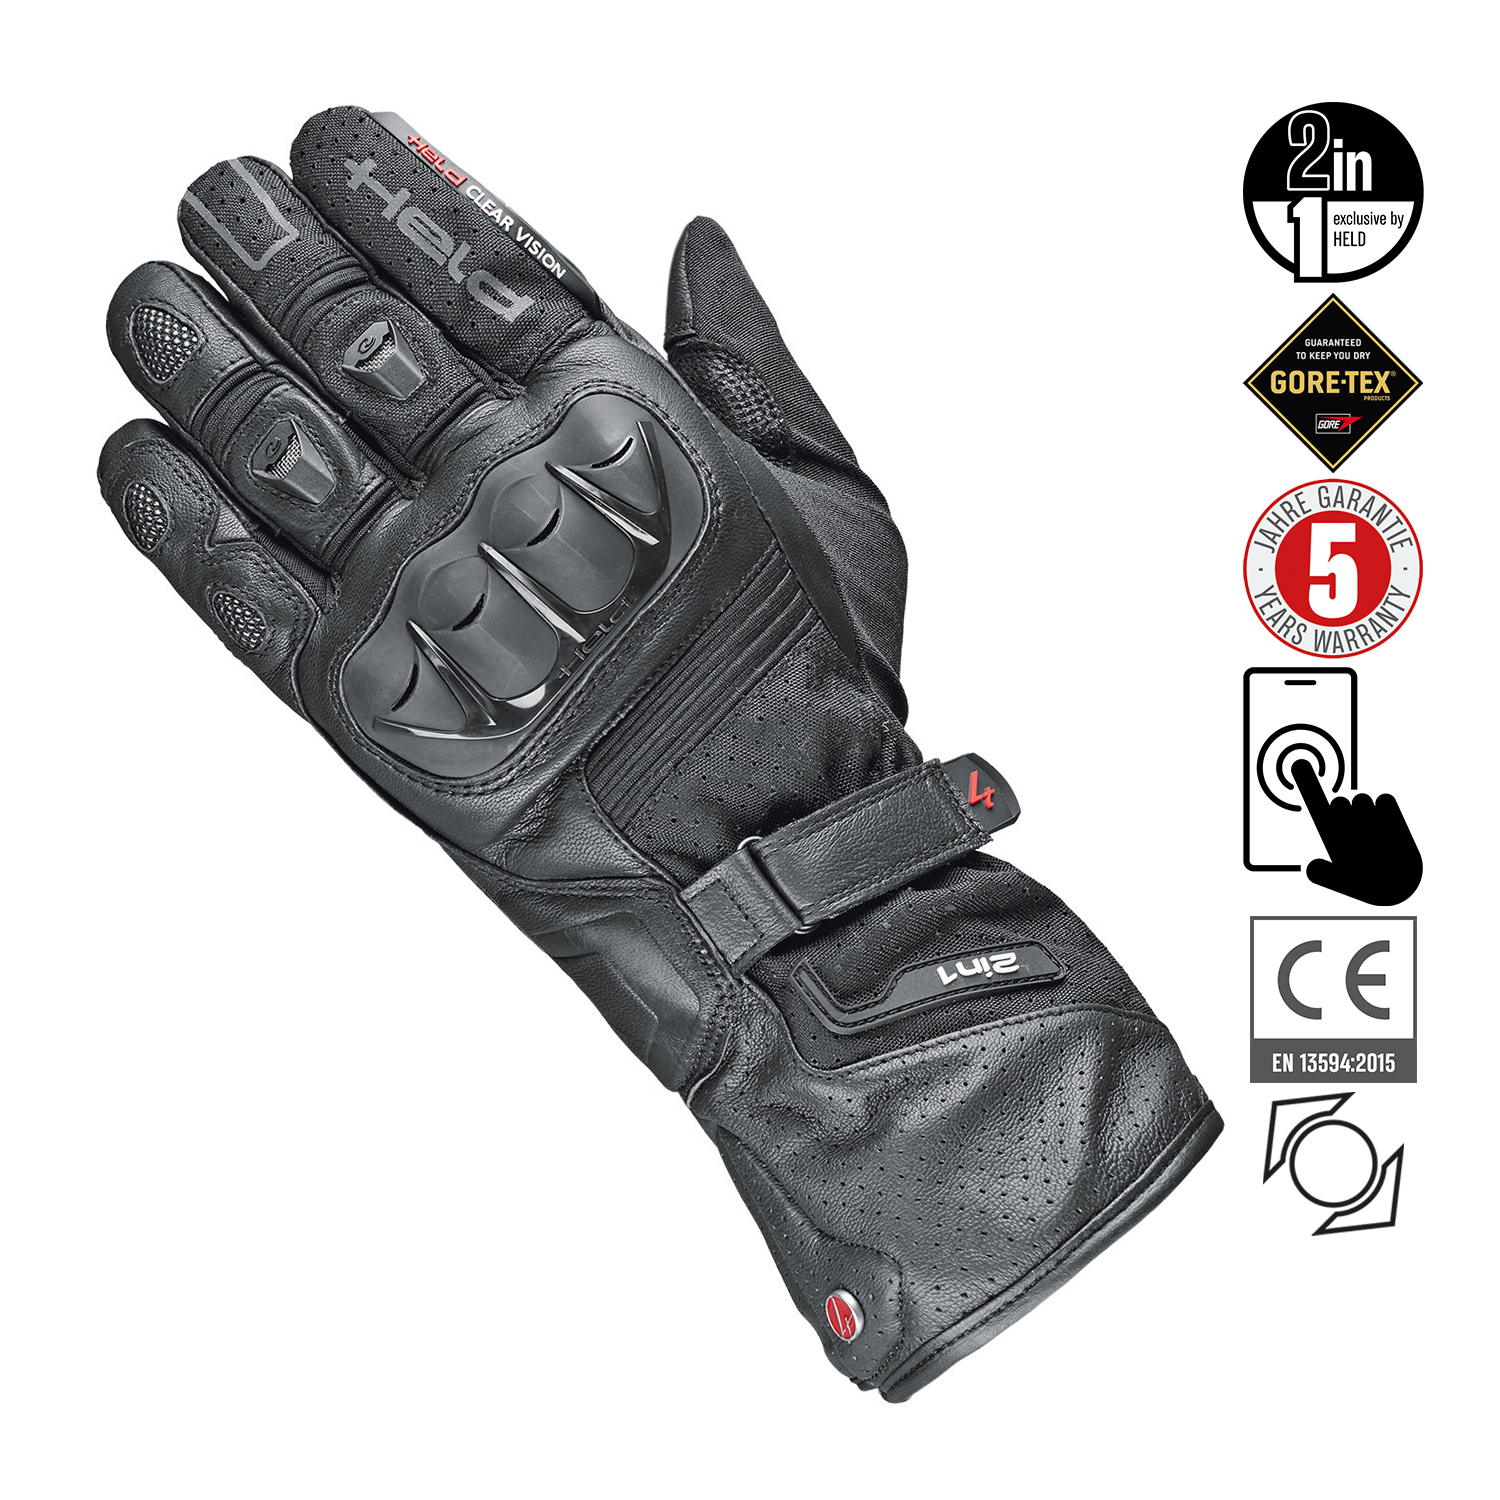 Held Air n Dry II Gore-Tex Gloves Black - Available in Various Sizes